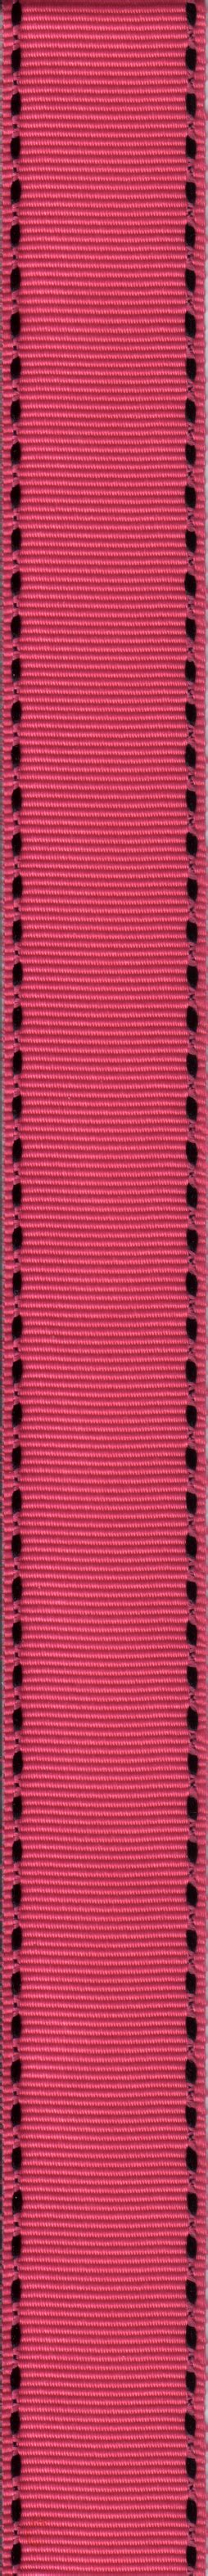 Pink Ribbon By Visualjunky On Deviantart